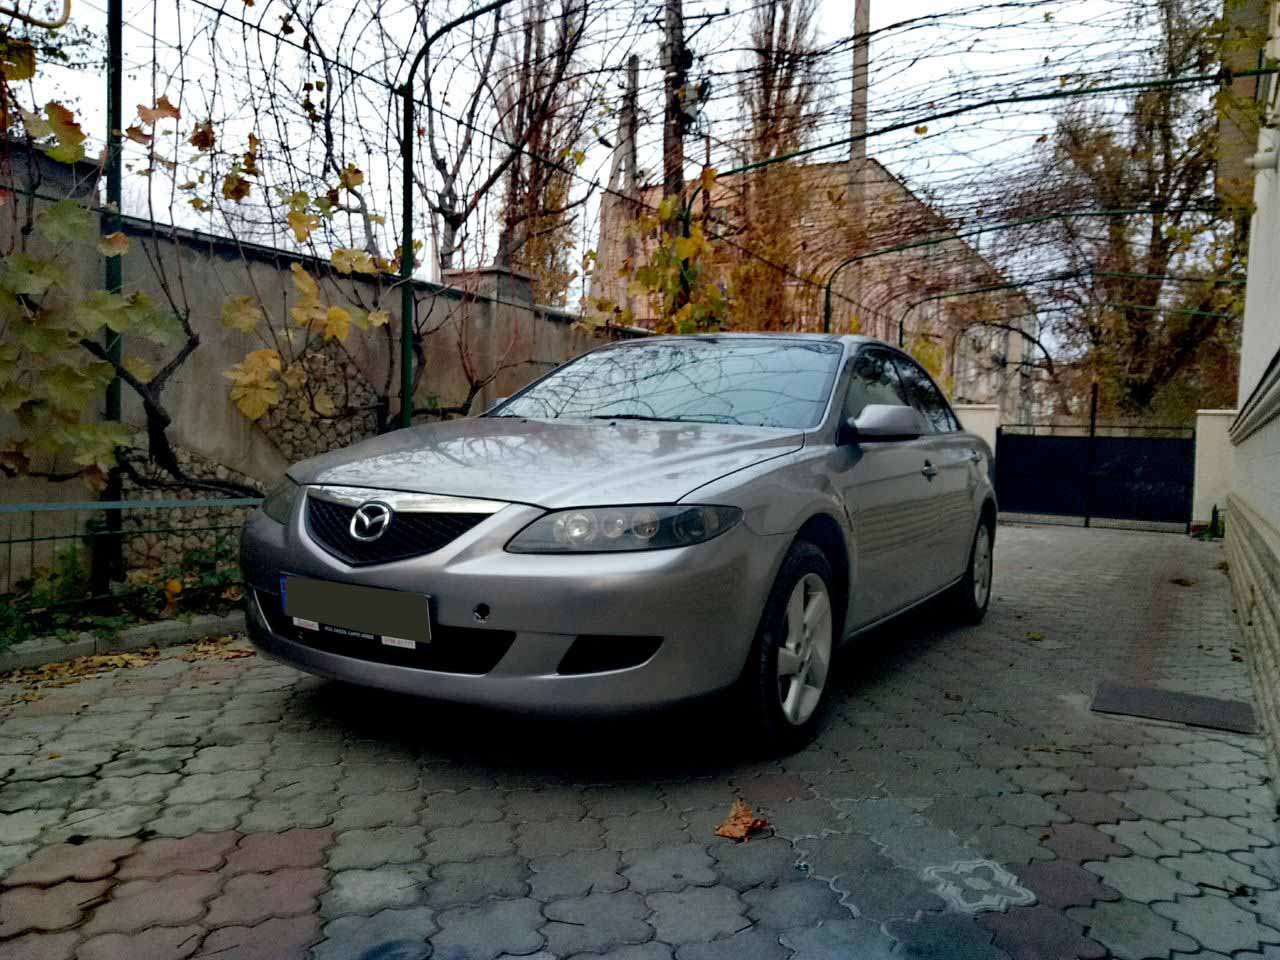 
Rent a Car Chisinau Moldova - Mazda 6
